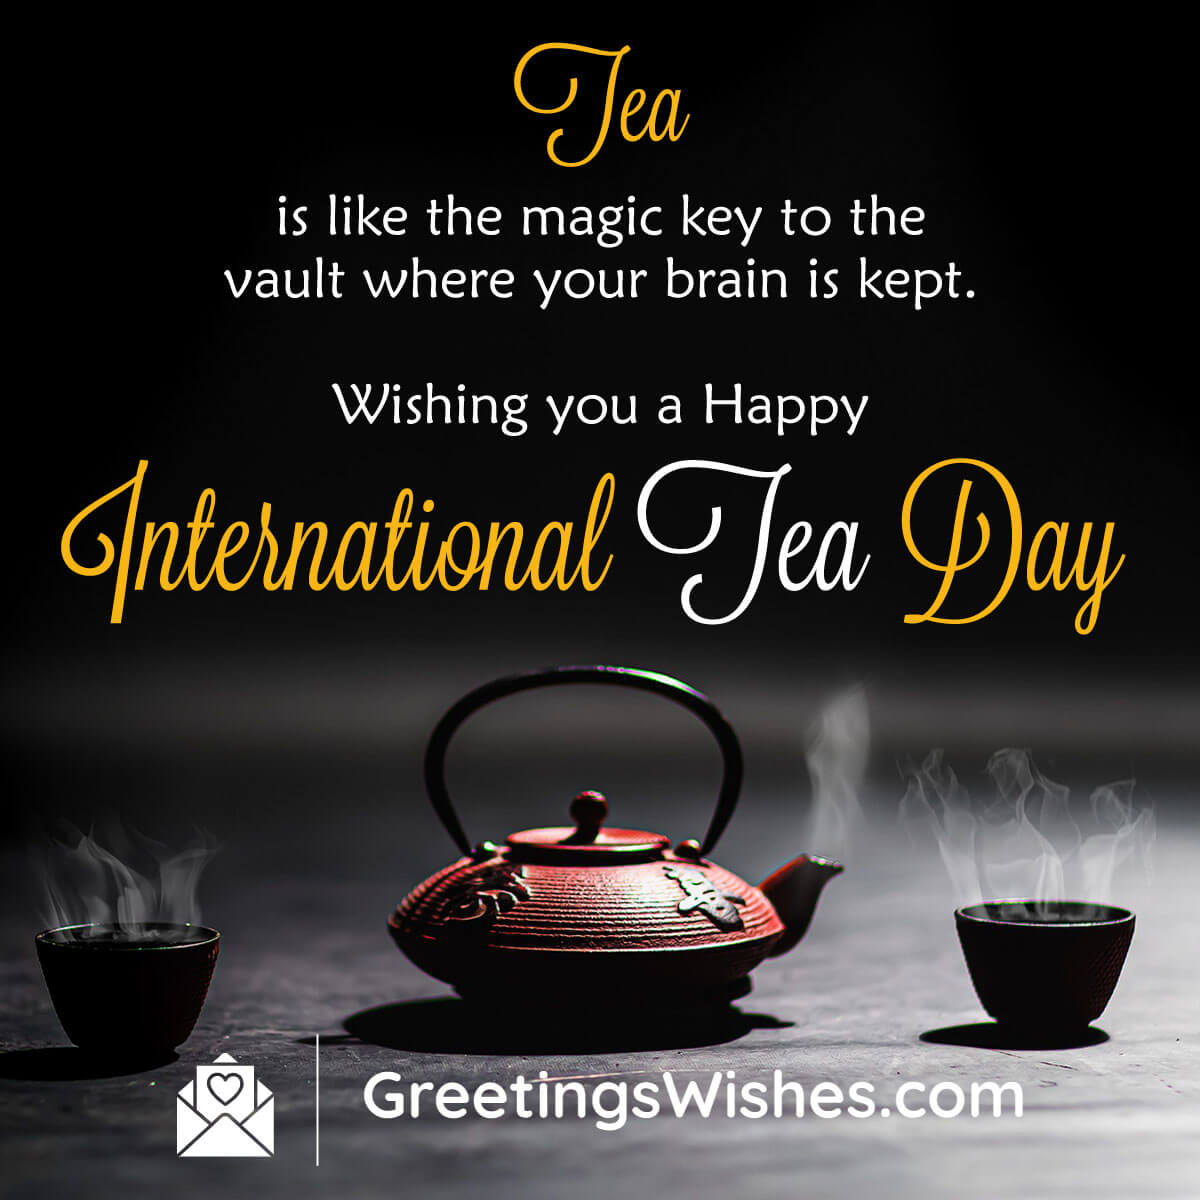 International Tea Day Images